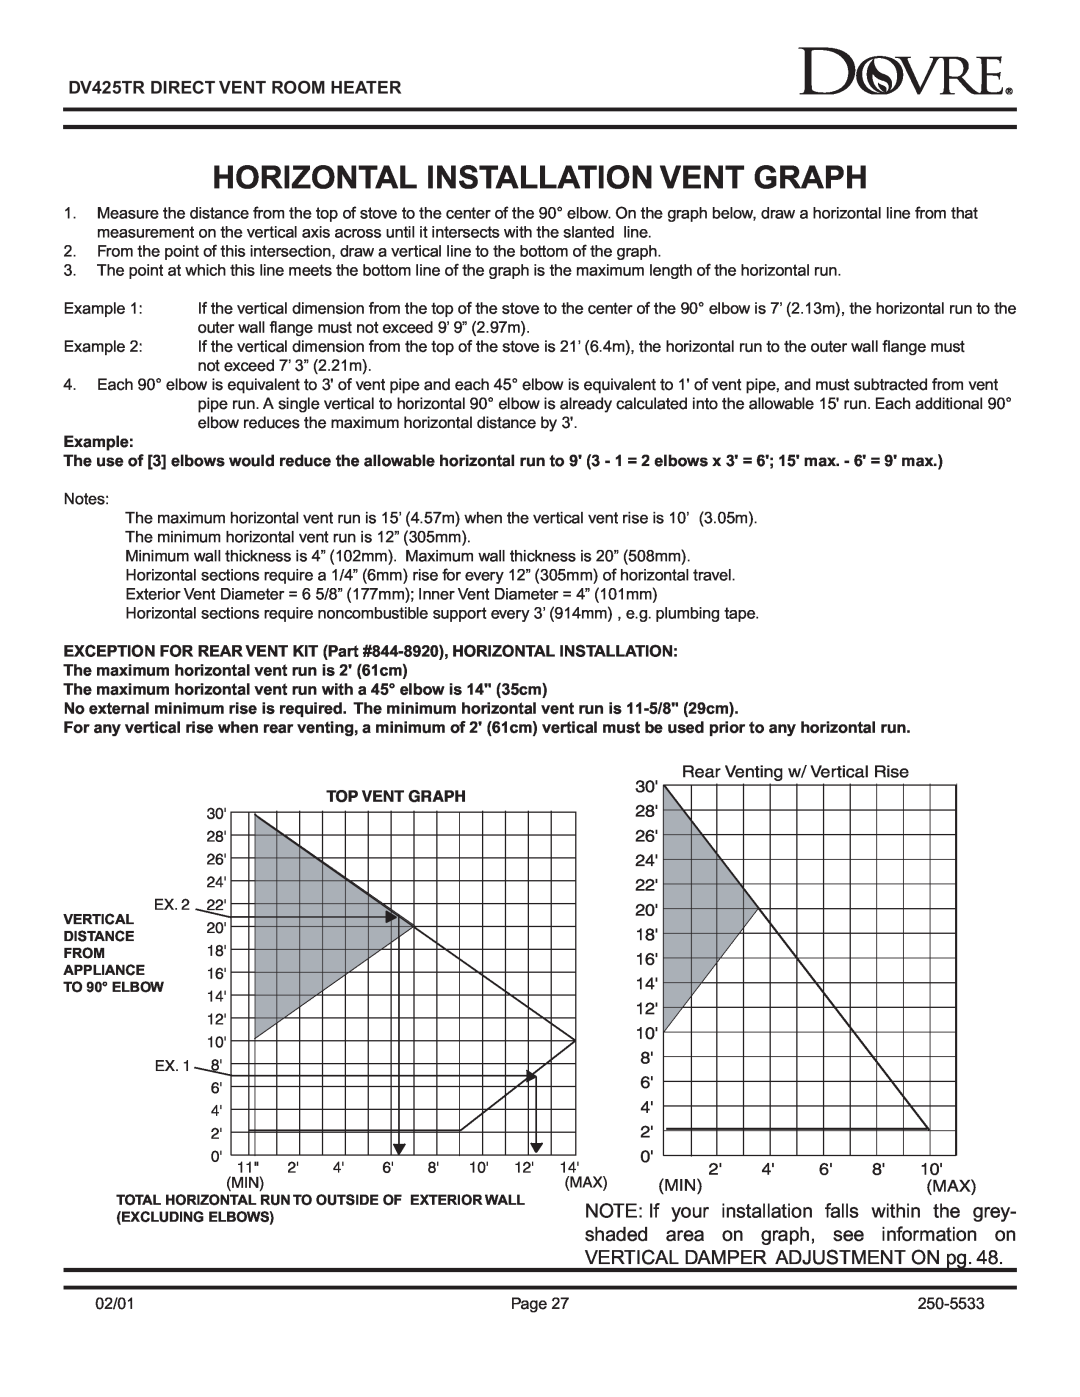 Sapphire Audio DV425TR owner manual Horizontal Installation Vent Graph 